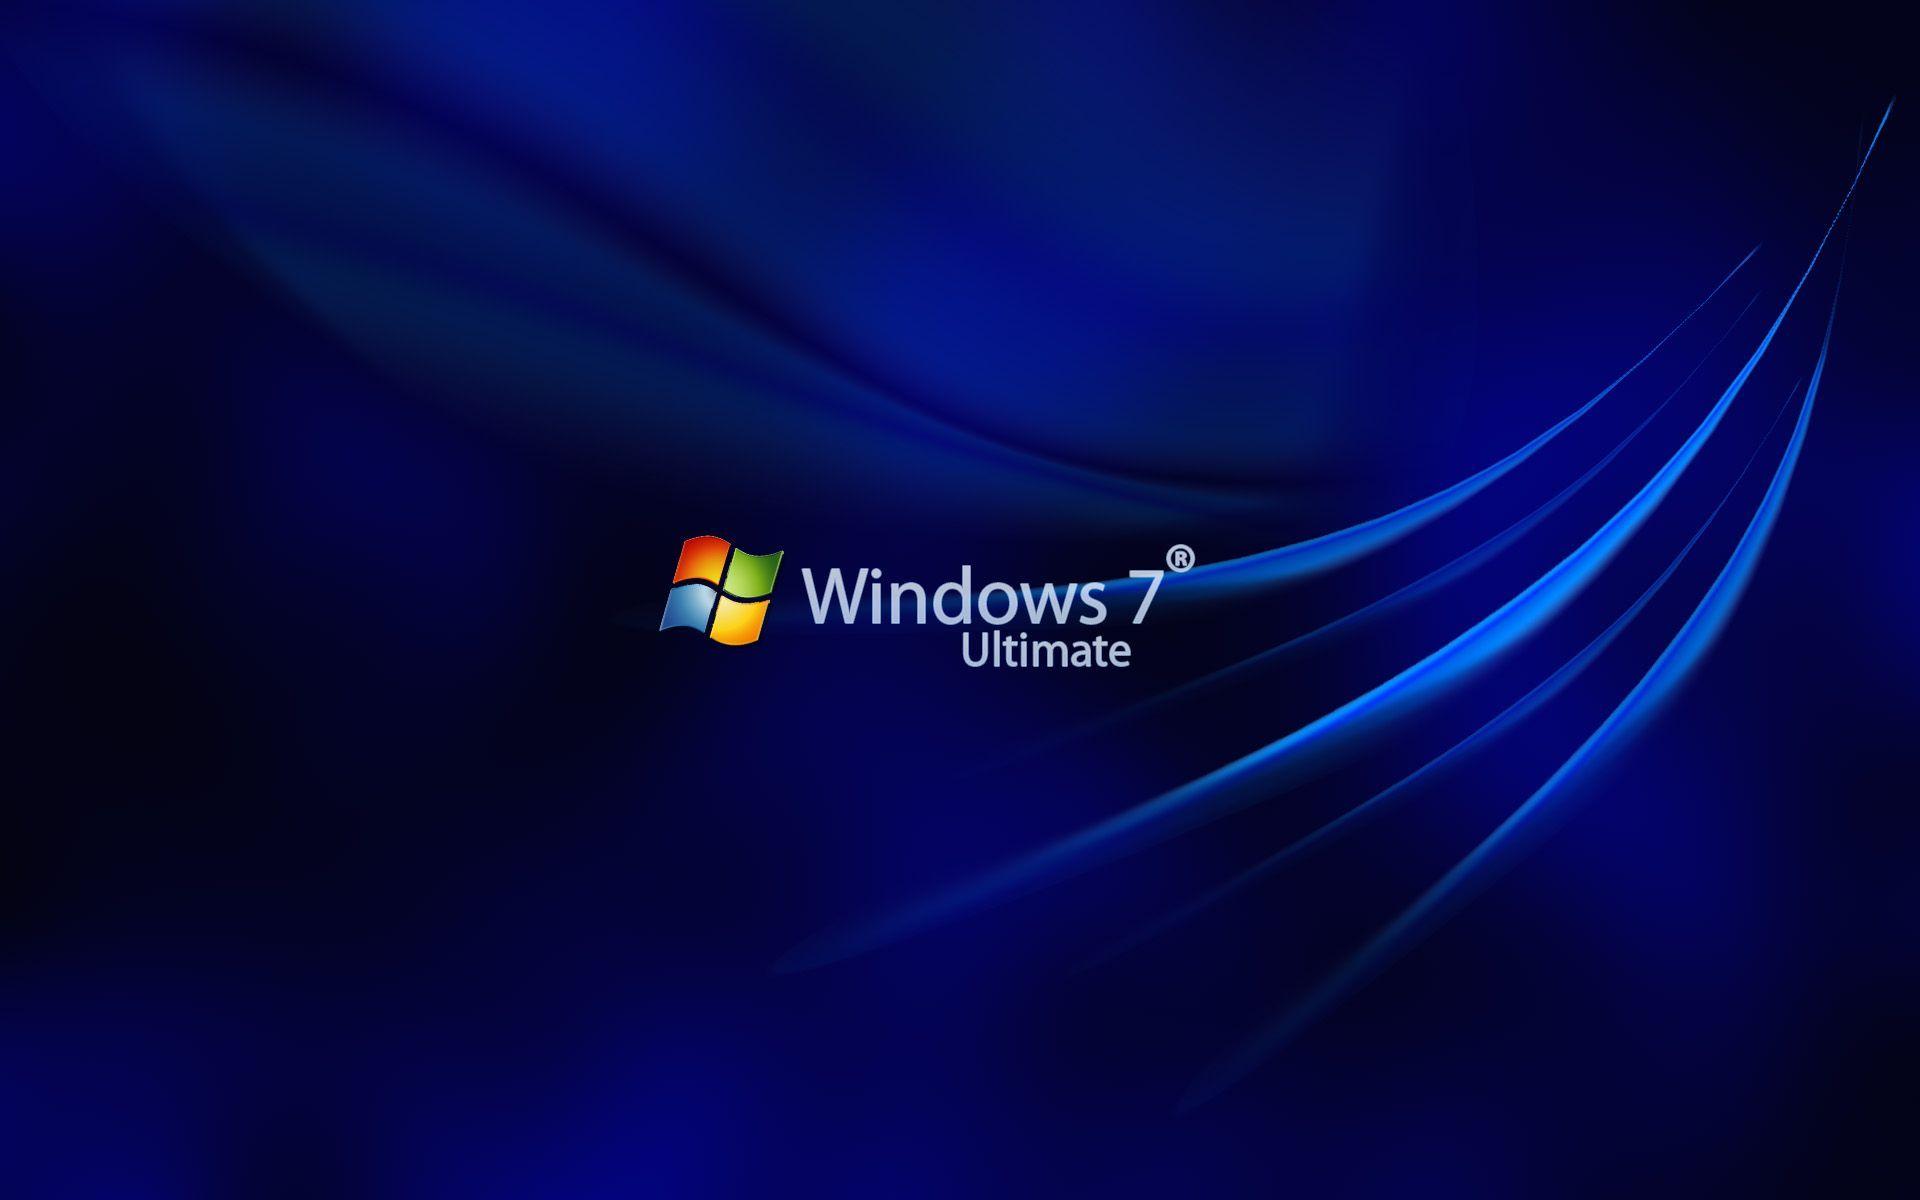 Wallpaper For > Windows 7 Ultimate Blue Wallpaper